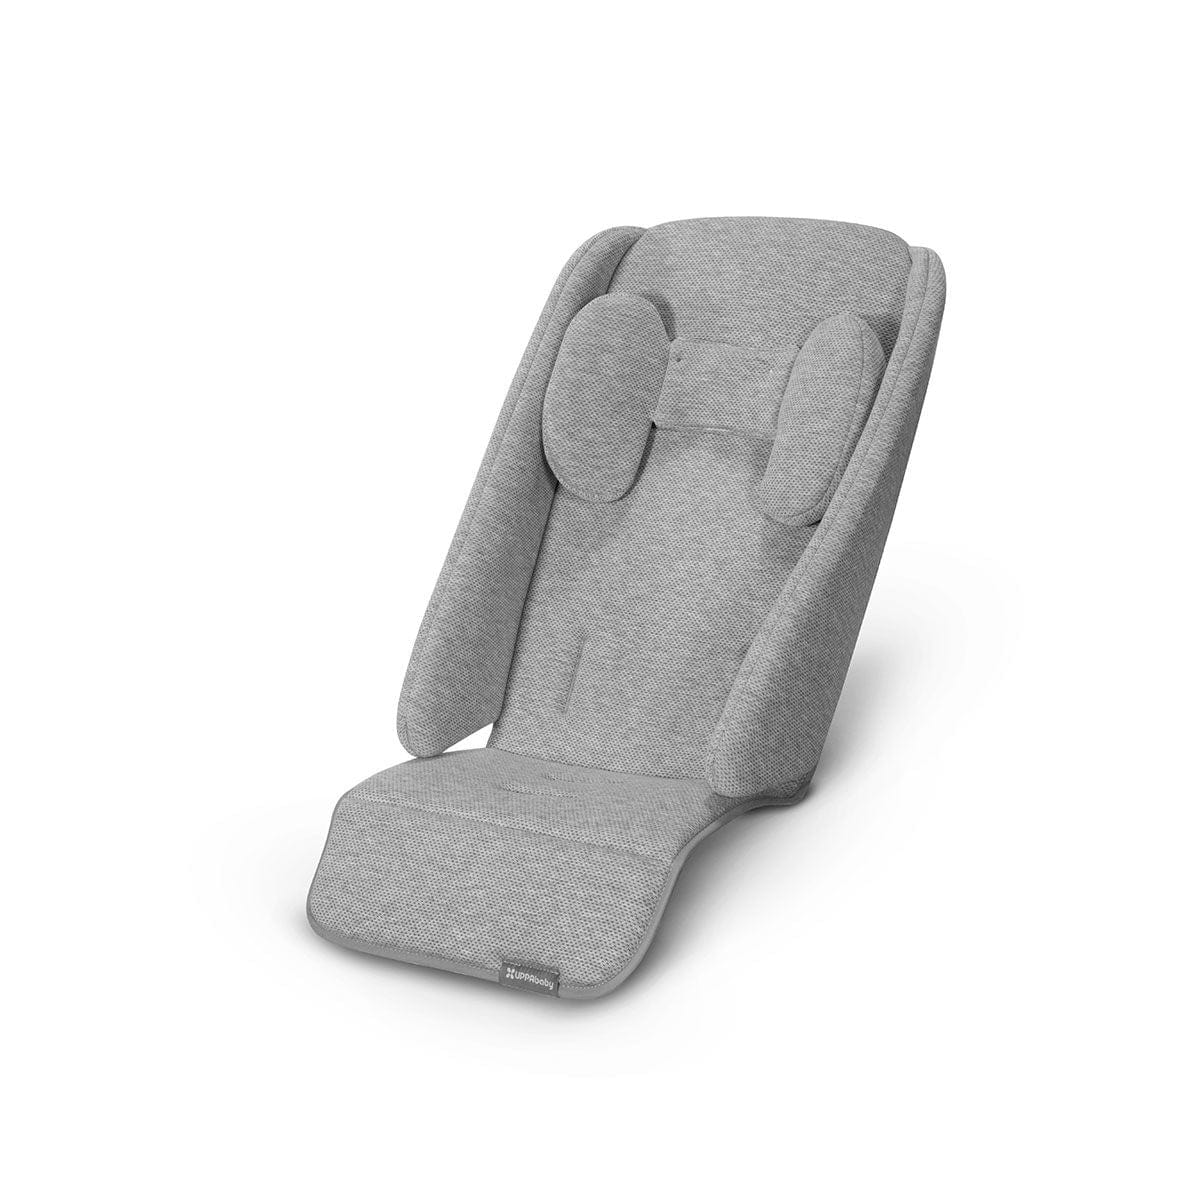 UPPAbaby stroller accessory UPPAbaby VISTA/CRUZ V2 Infant SnugSeat